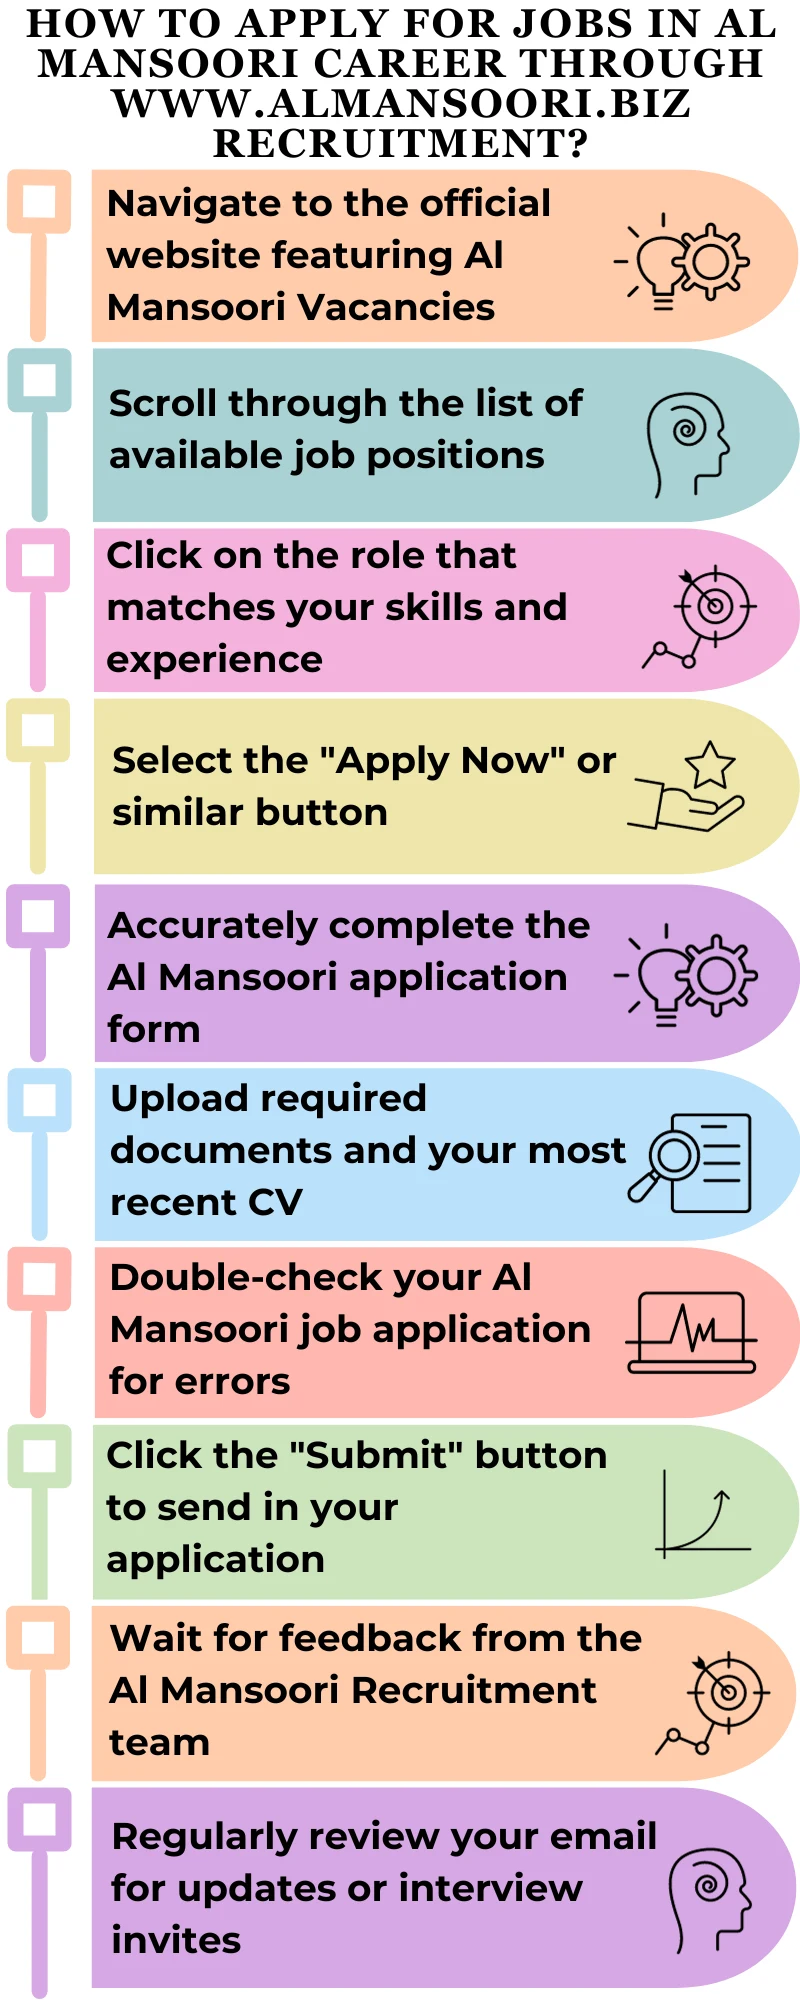 How to Apply for Jobs in Al Mansoori Career through www.almansoori.biz recruitment